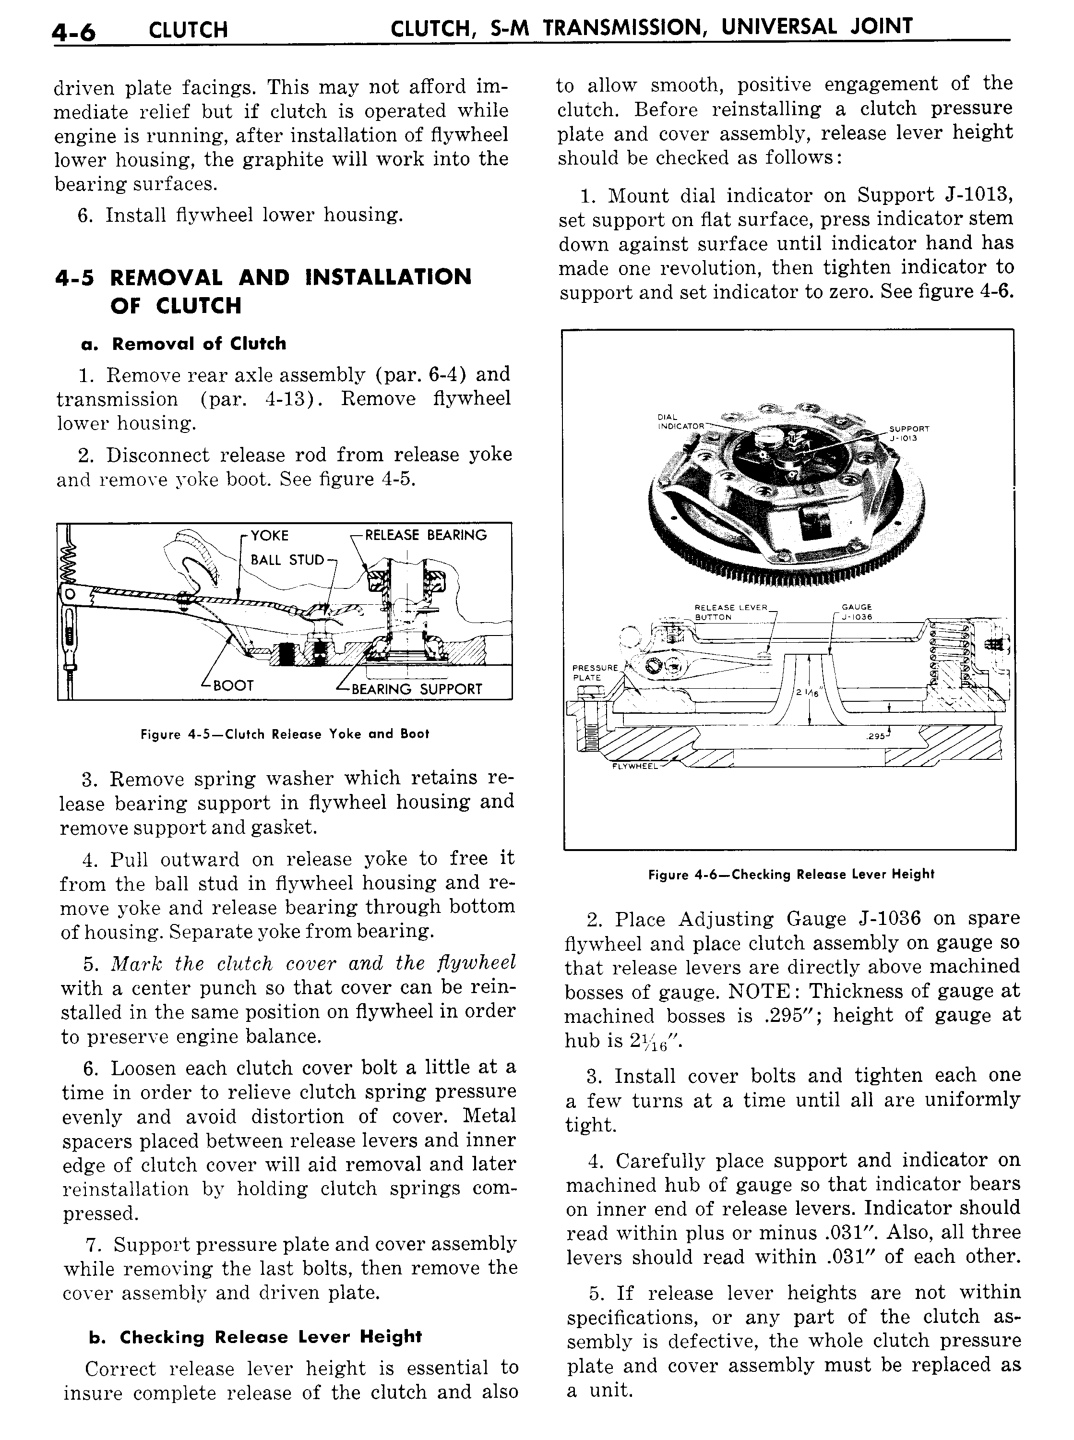 n_05 1957 Buick Shop Manual - Clutch & Trans-006-006.jpg